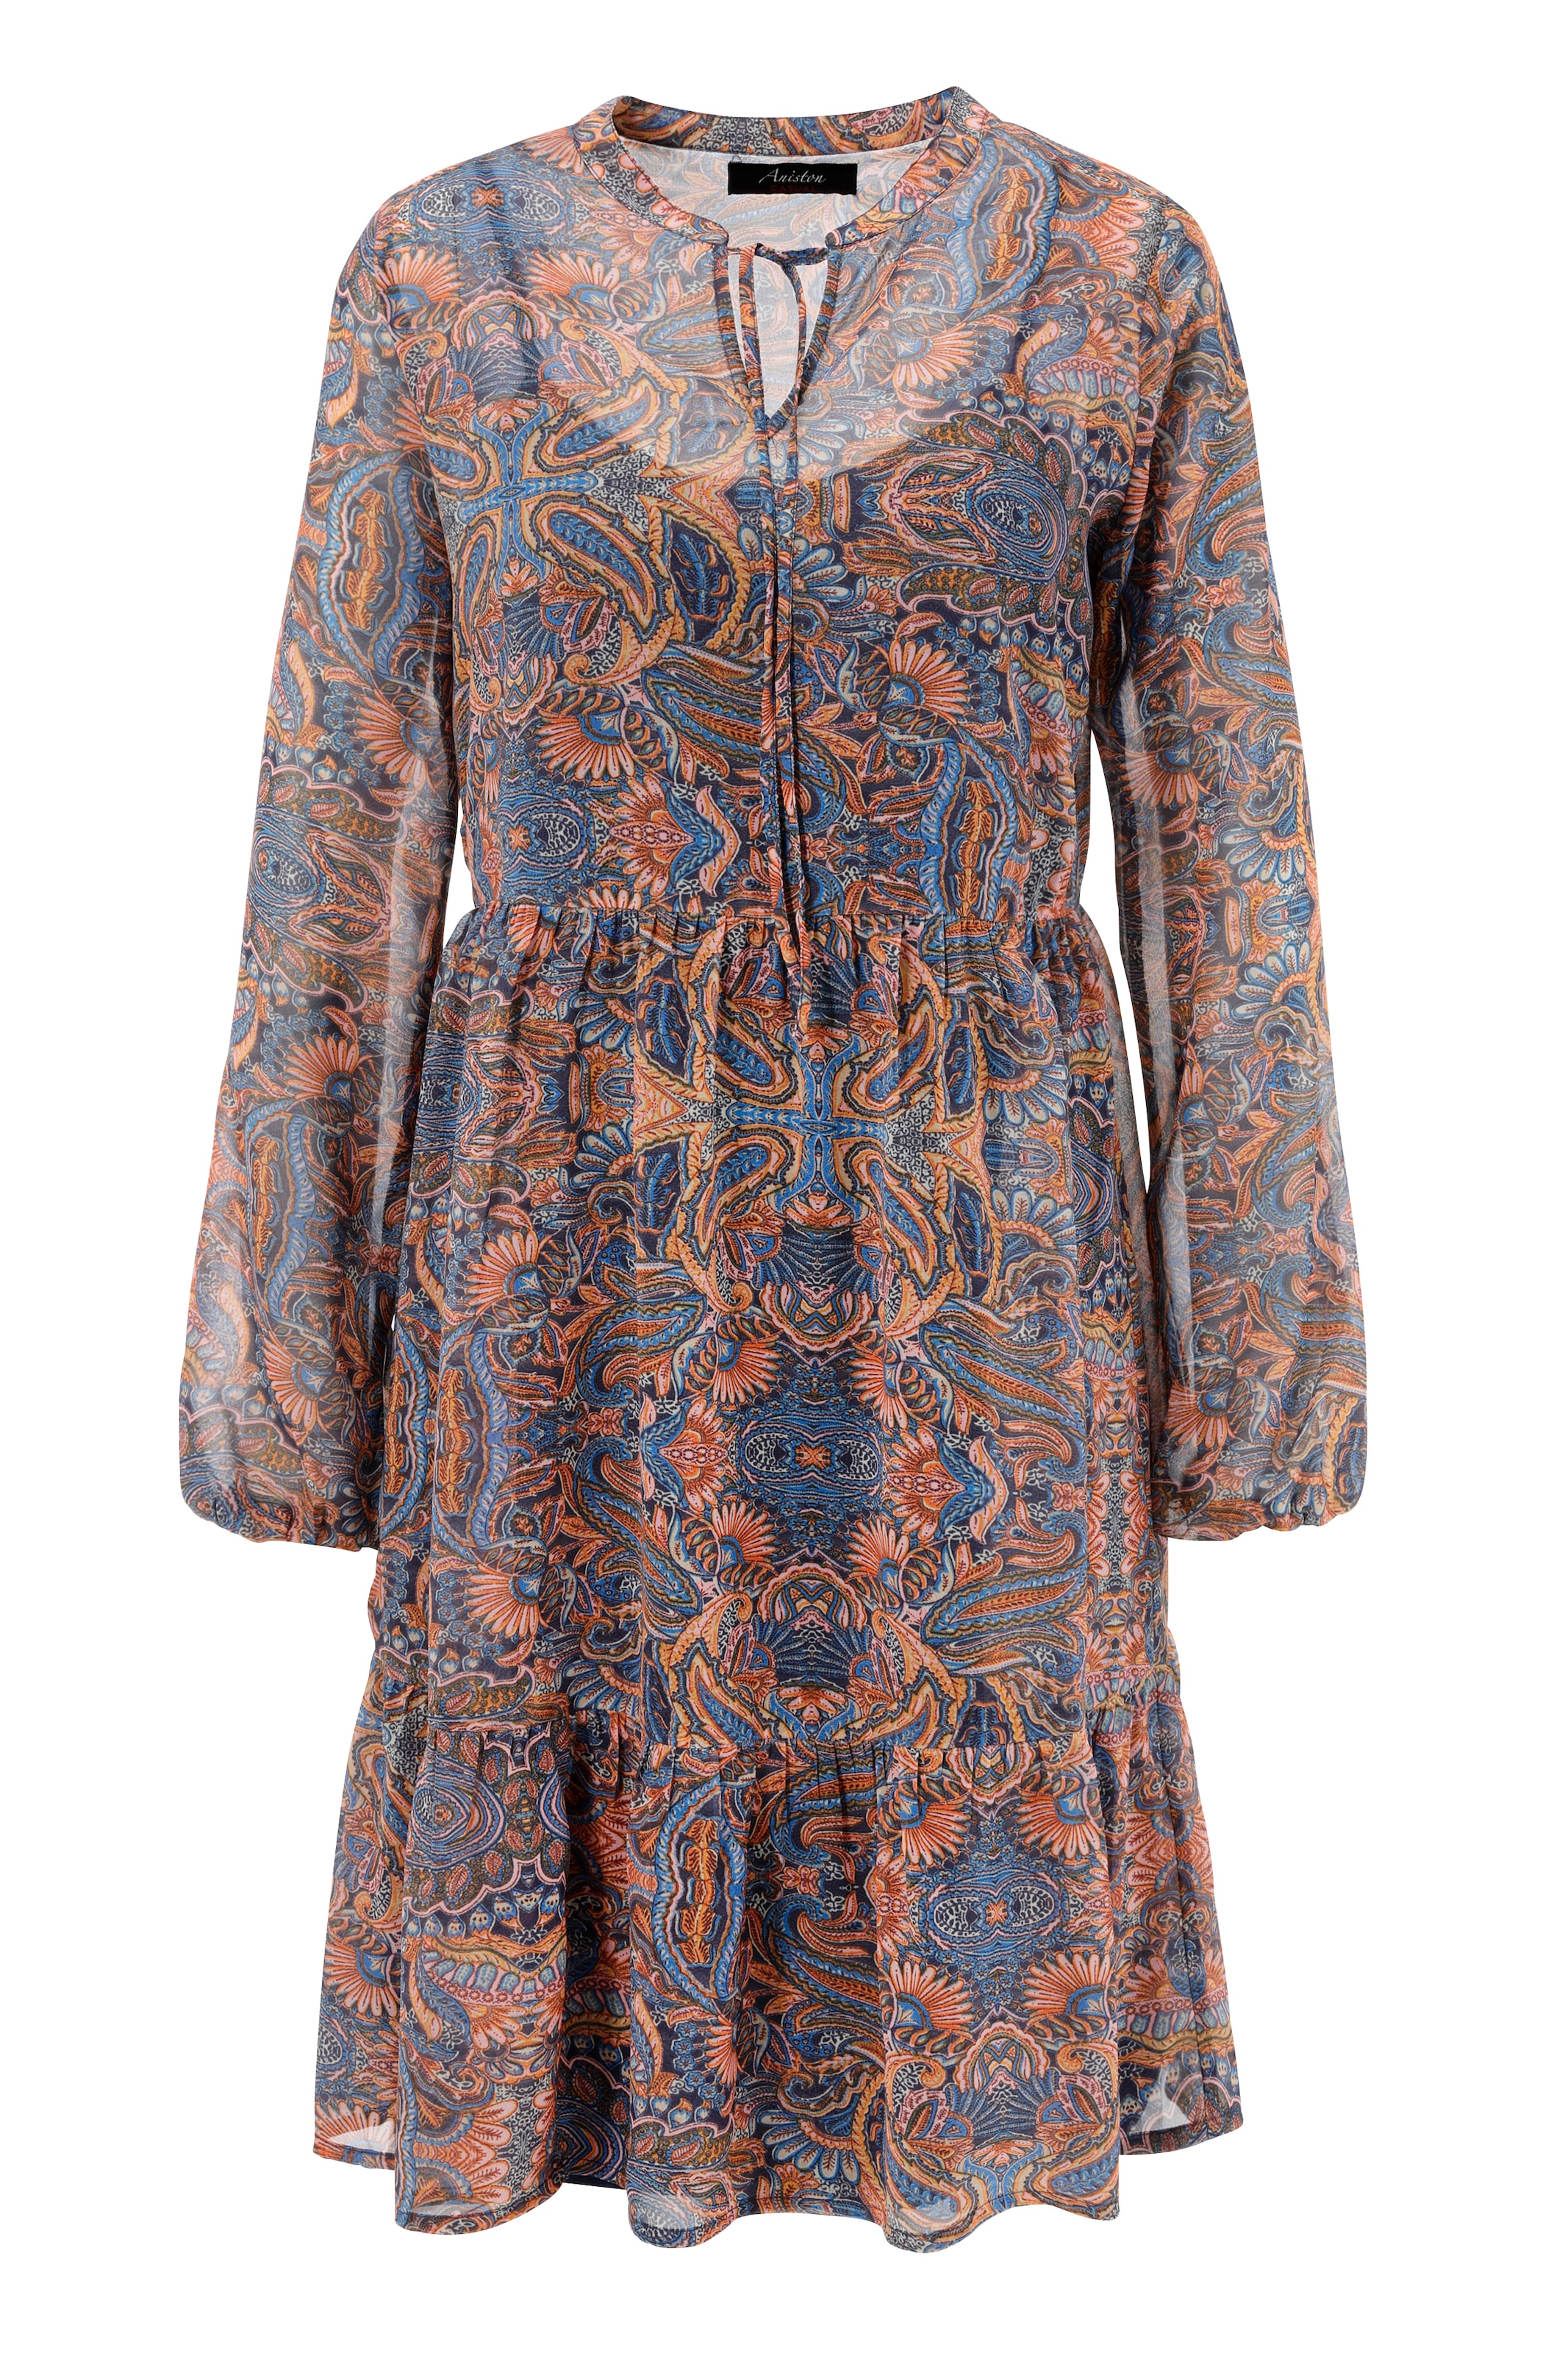 Paisley-Muster bei phantasievollem CASUAL Aniston Blusenkleid, online bedruckt mit